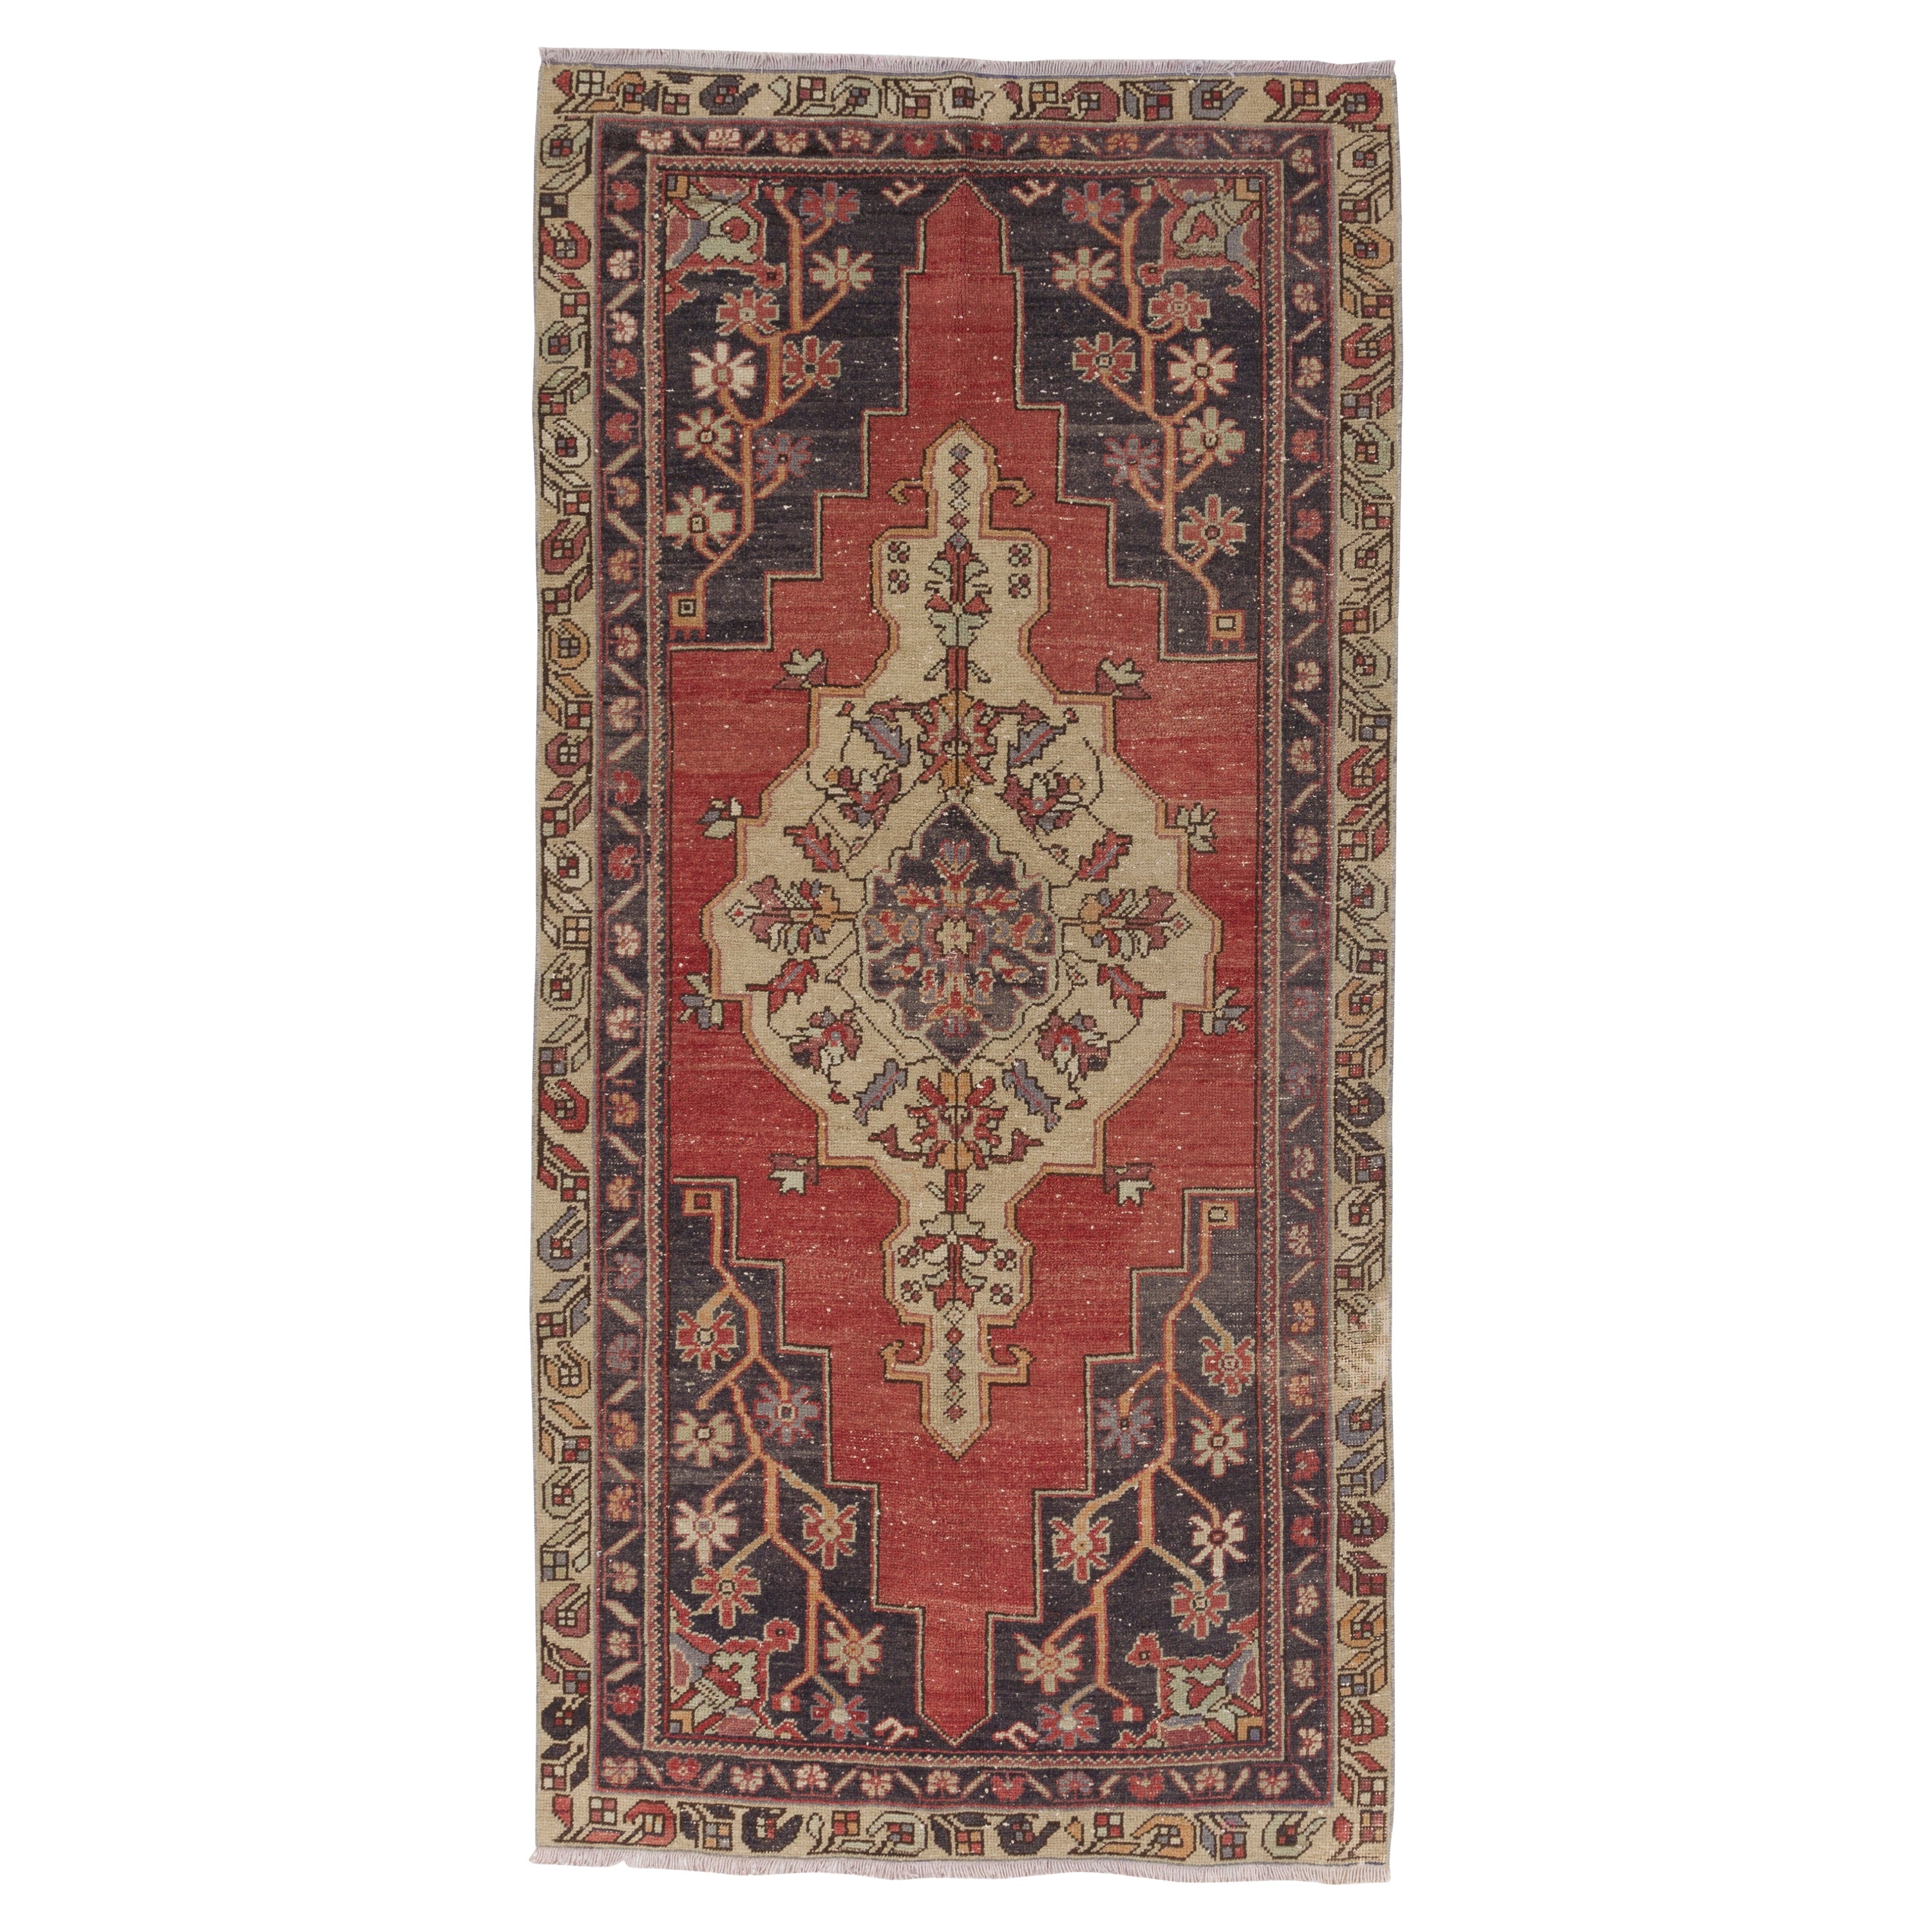 4x8.4 ft Handmade Vintage Turkish Village Rug, Traditional Oriental Wool Carpet